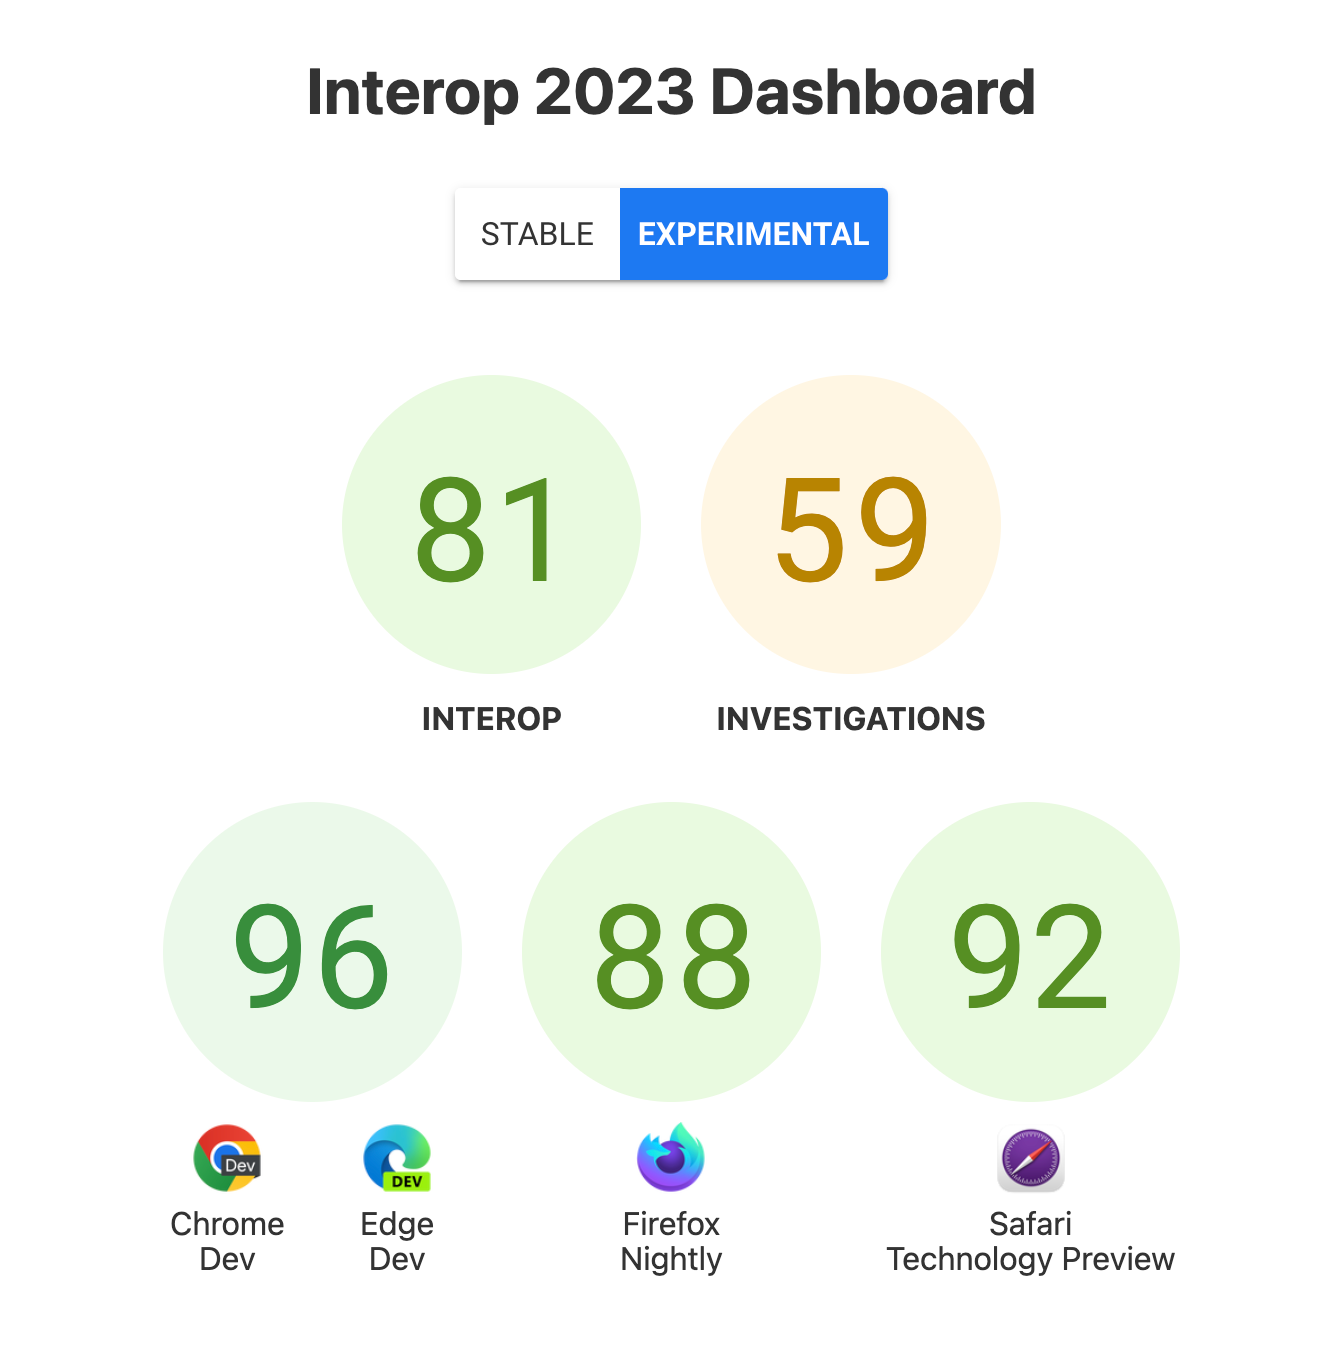 Interop 전체의 점수는 81점, 조사 59점, 브라우저당 점수로 평가되었습니다. Chrome Dev 및 Edge Dev는 96점, Firefox Nightly는 88점, Safari Technology Preview는 92점을 받았습니다.